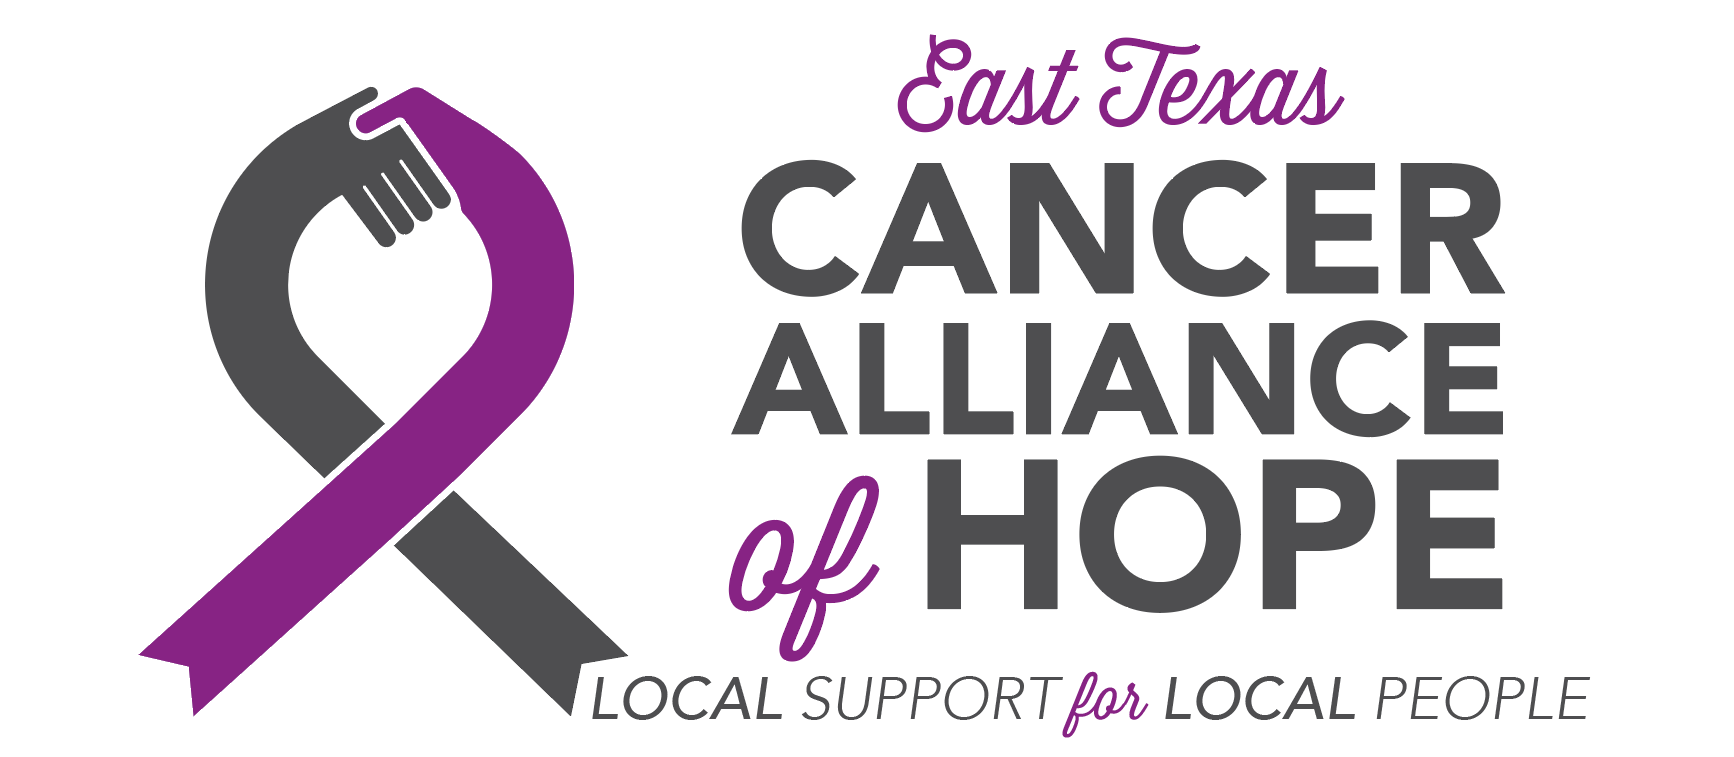 East Texas Cancer Alliance of Hope logo